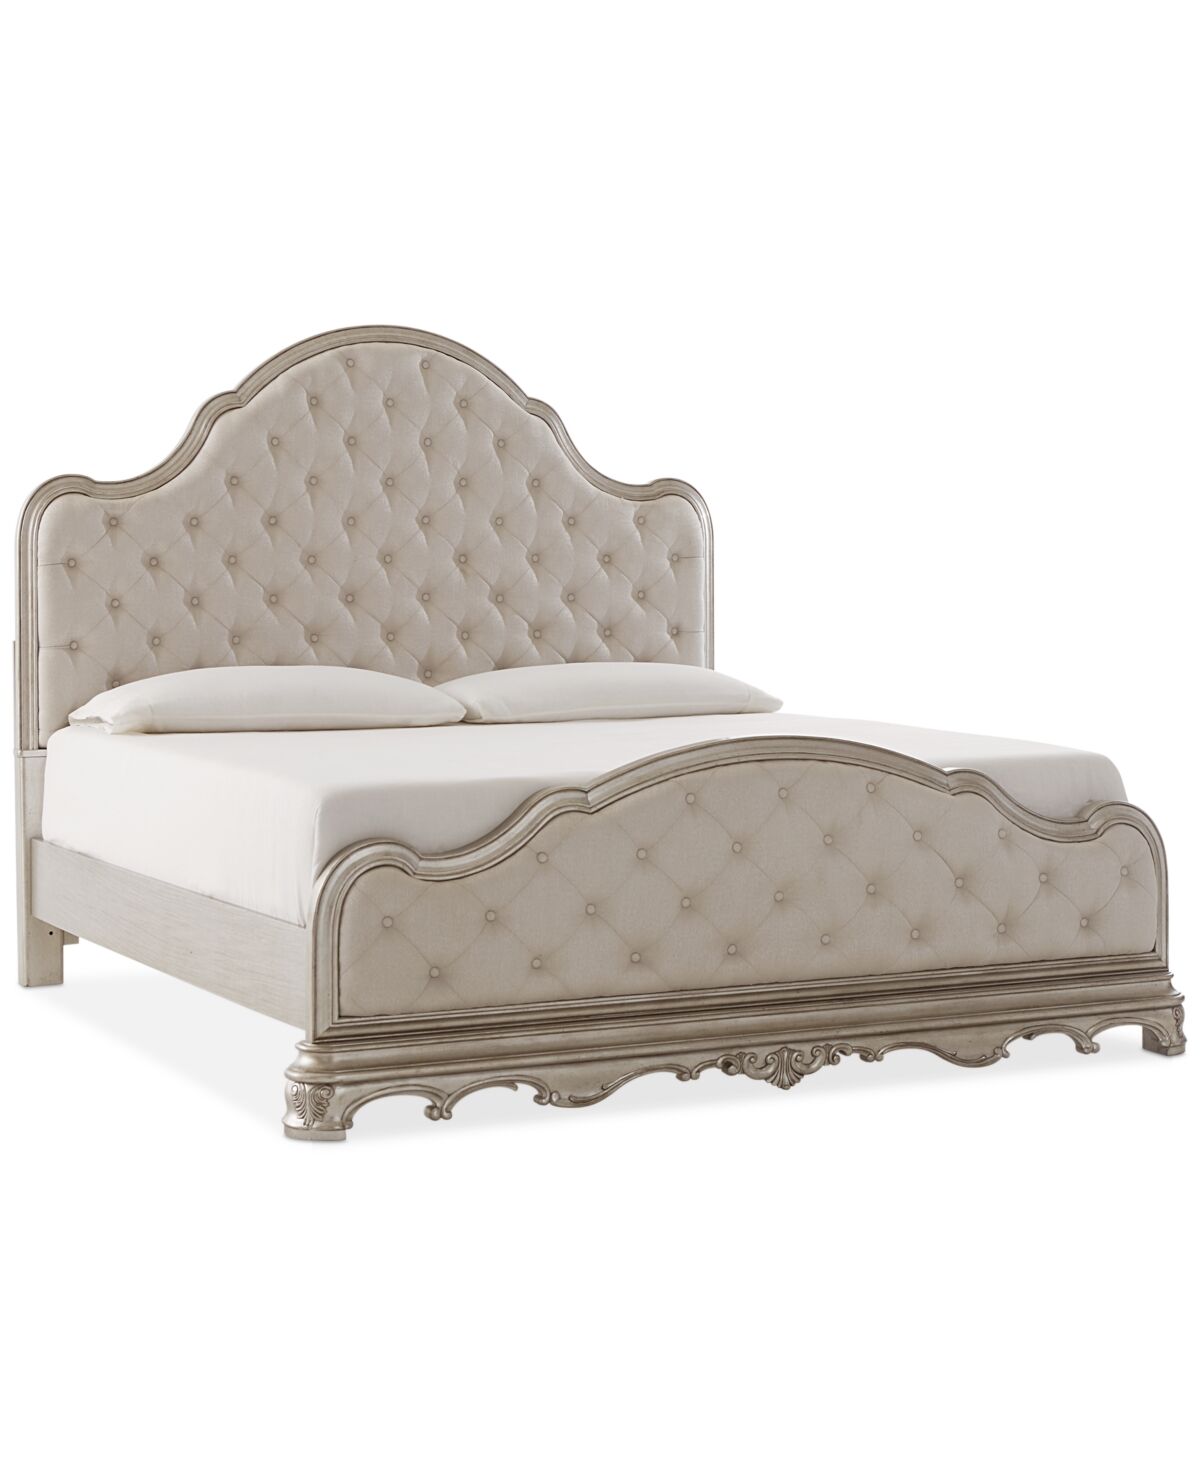 Furniture Nicosa Queen Bed